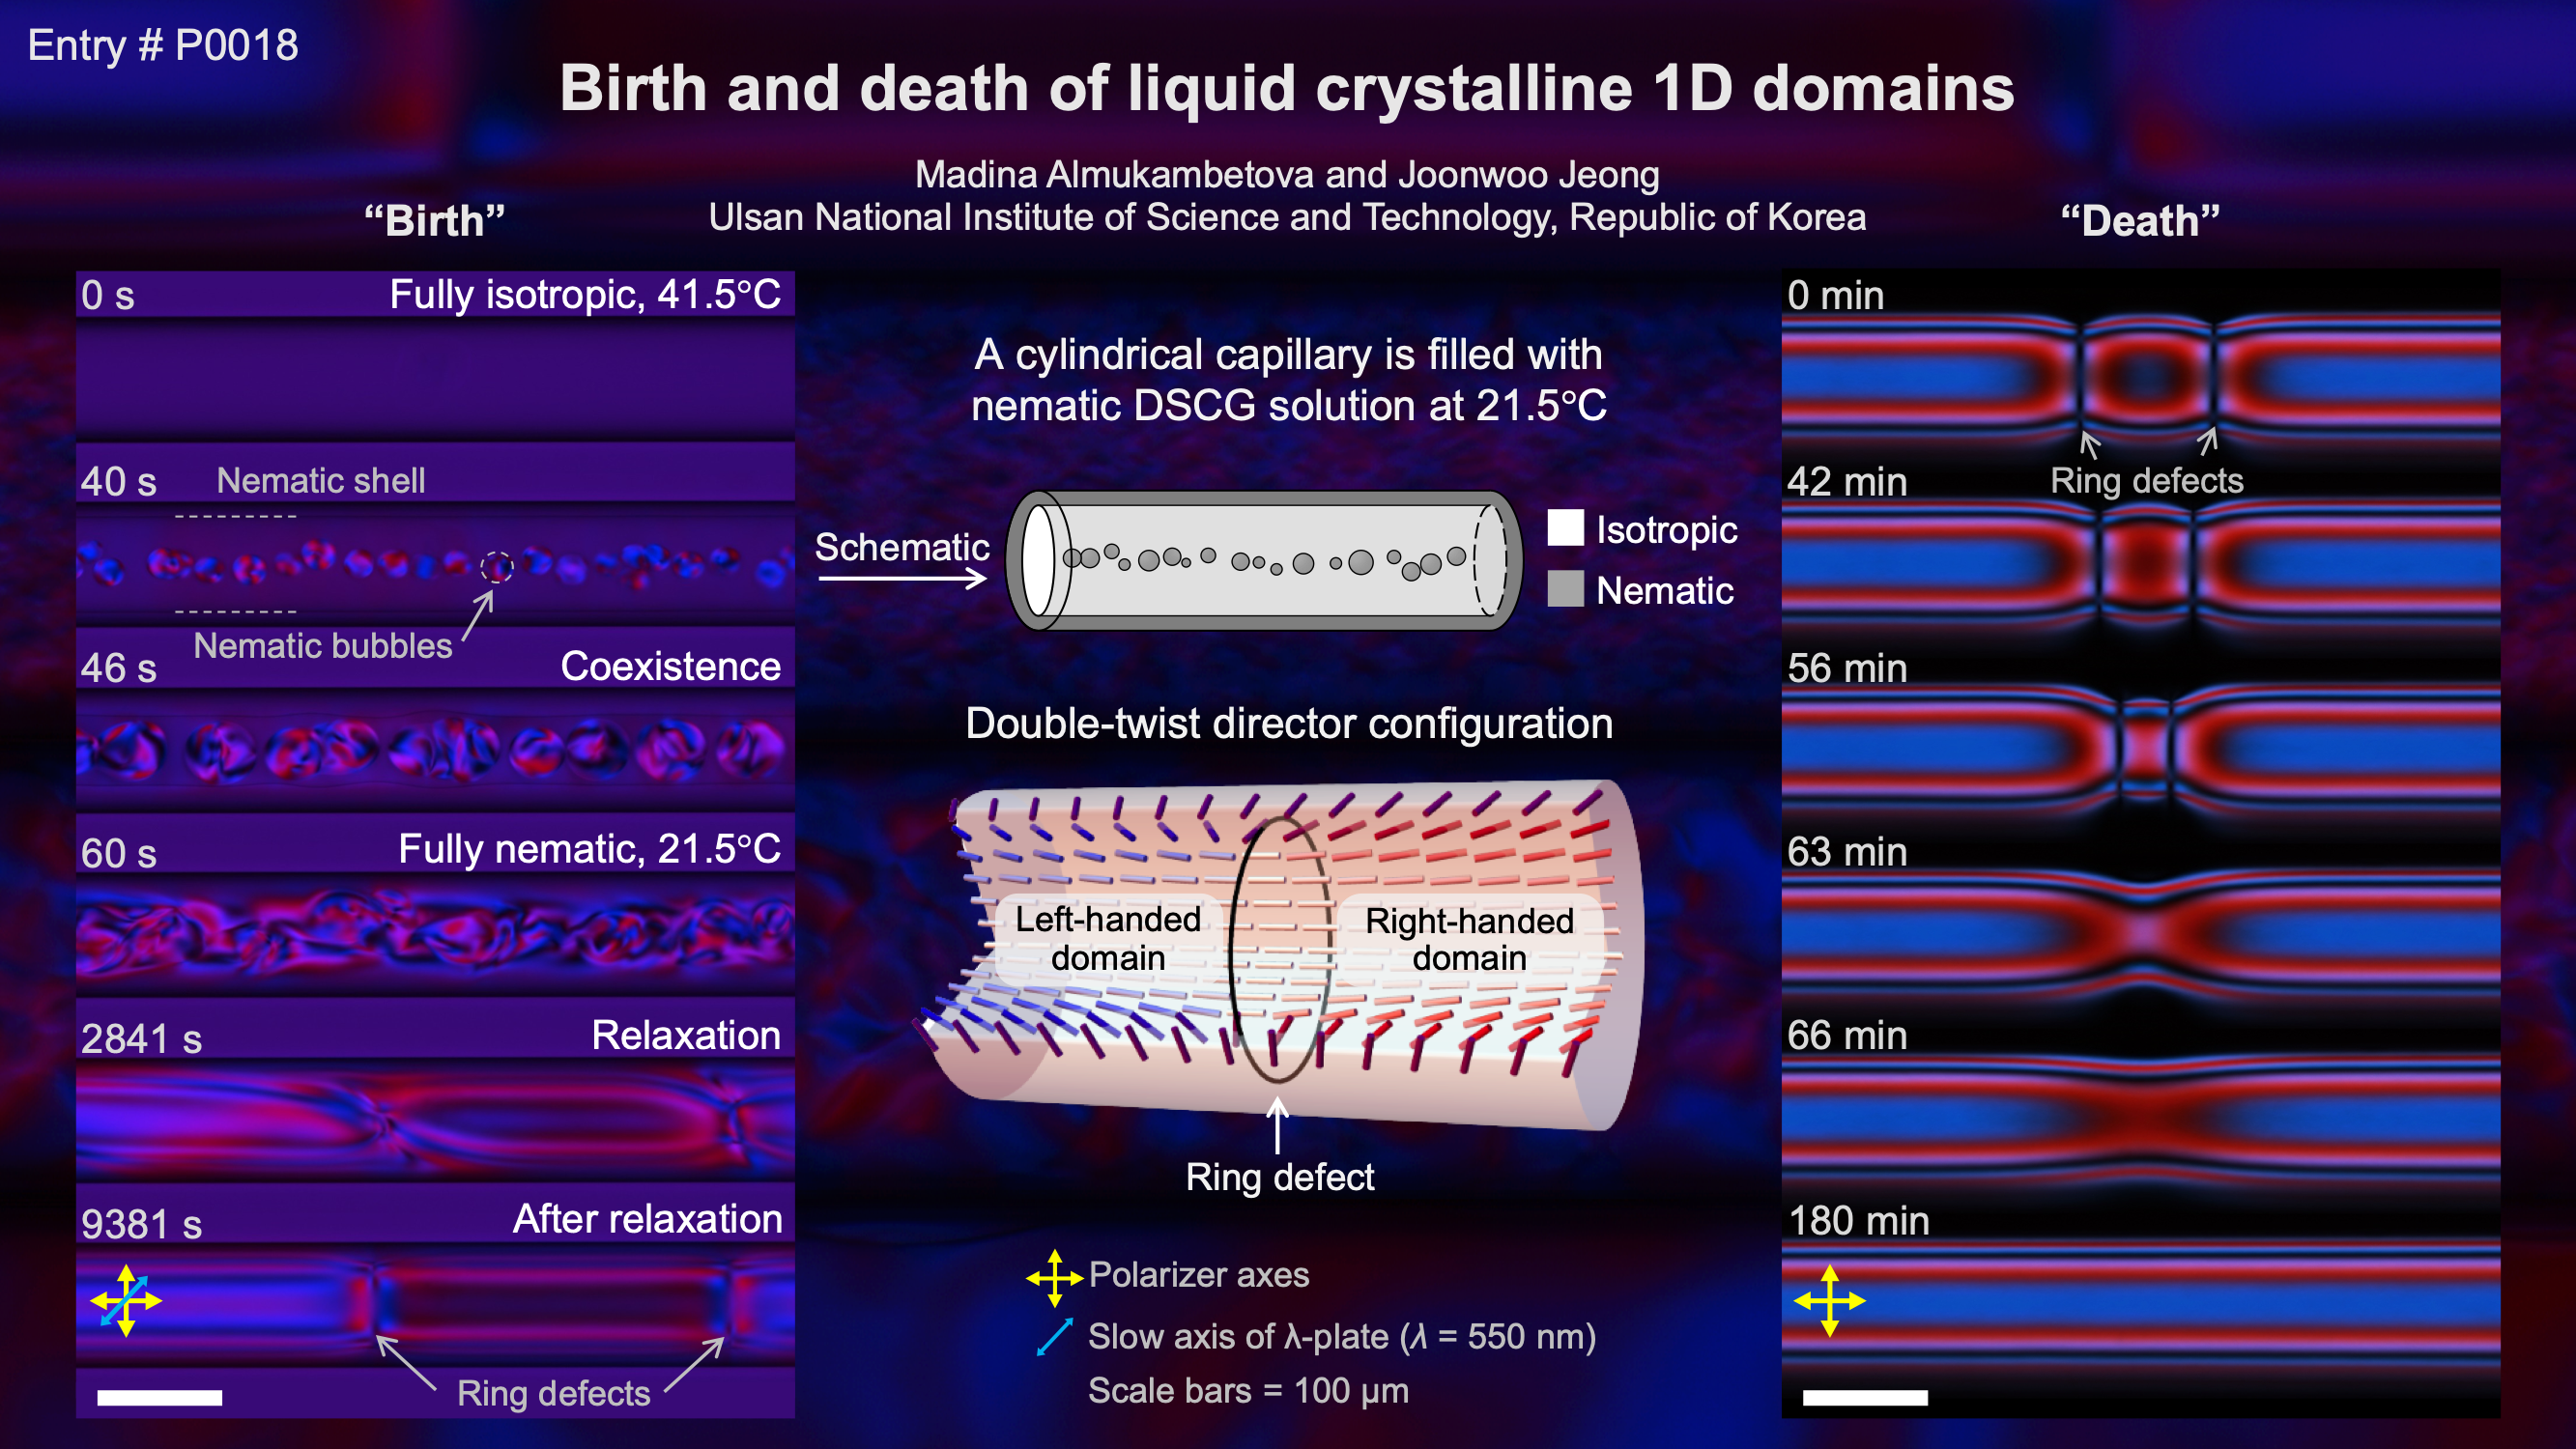 Birth and death of liquid crystalline 1D domains